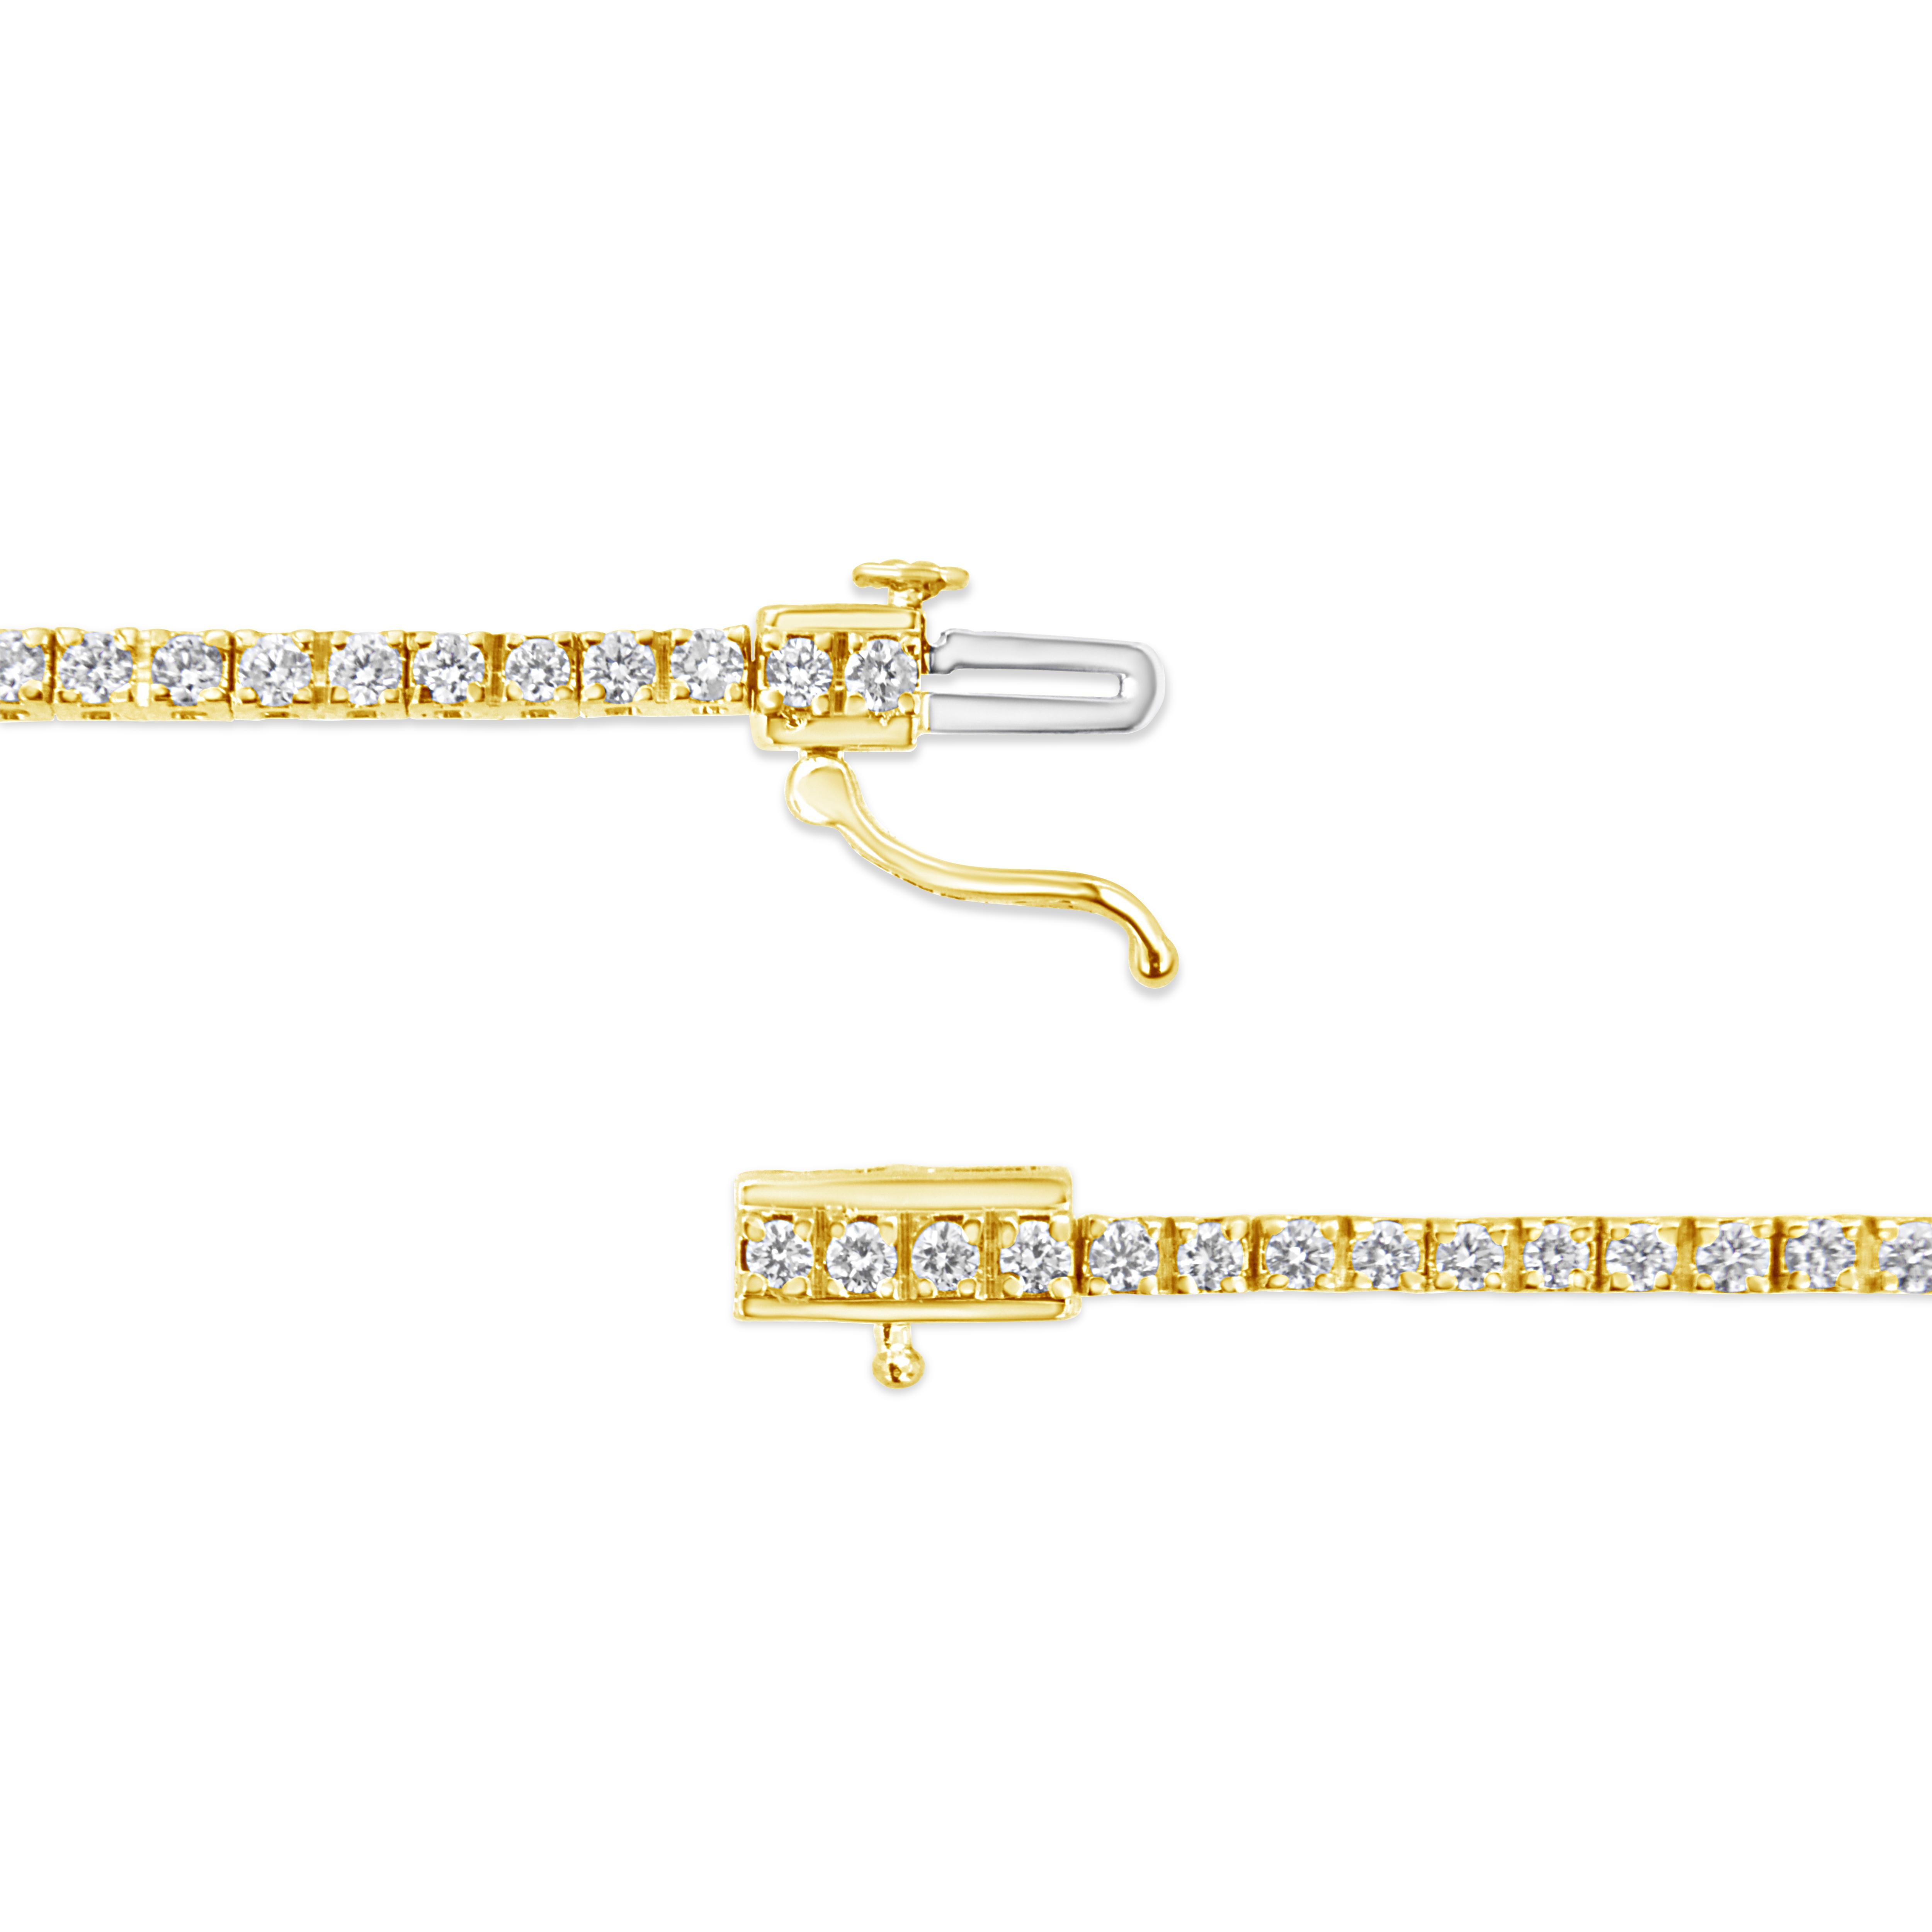 how much is a 2 carat diamond tennis bracelet worth